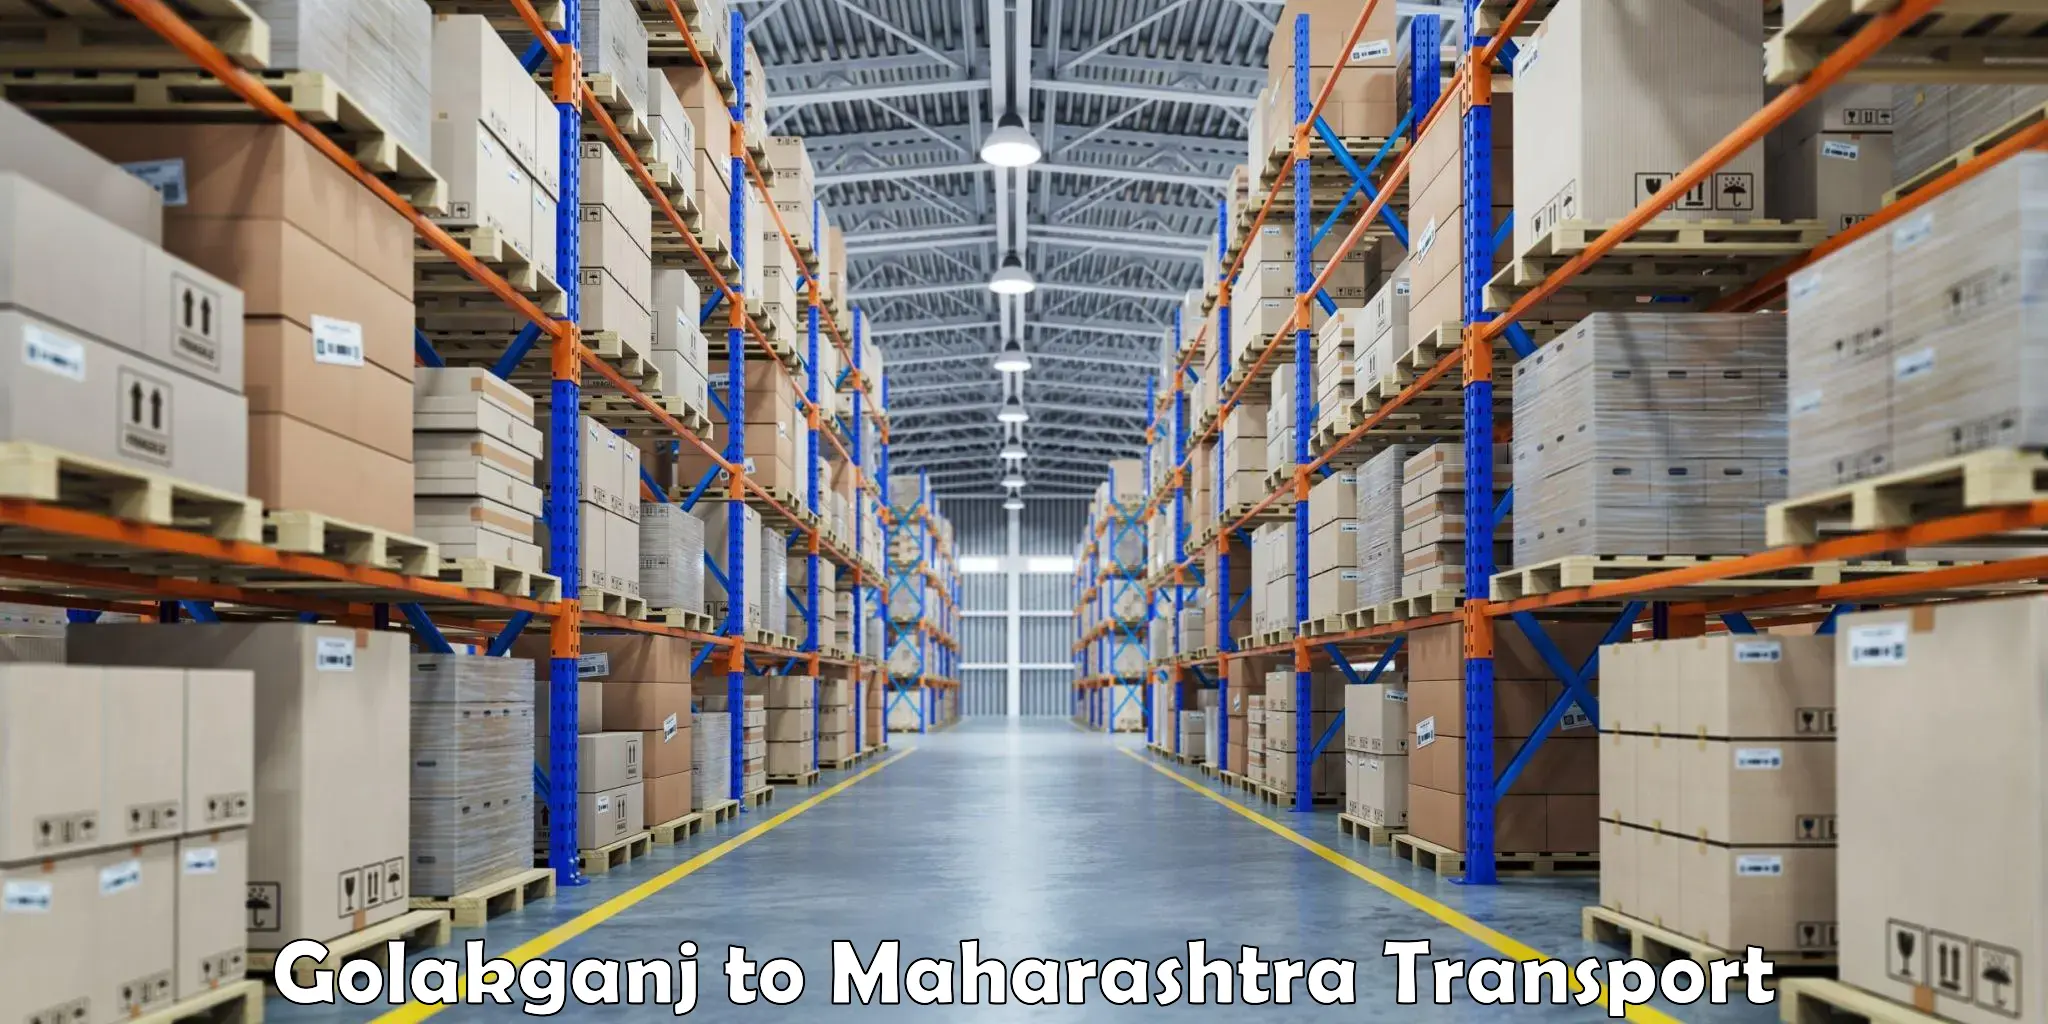 Truck transport companies in India Golakganj to Supe